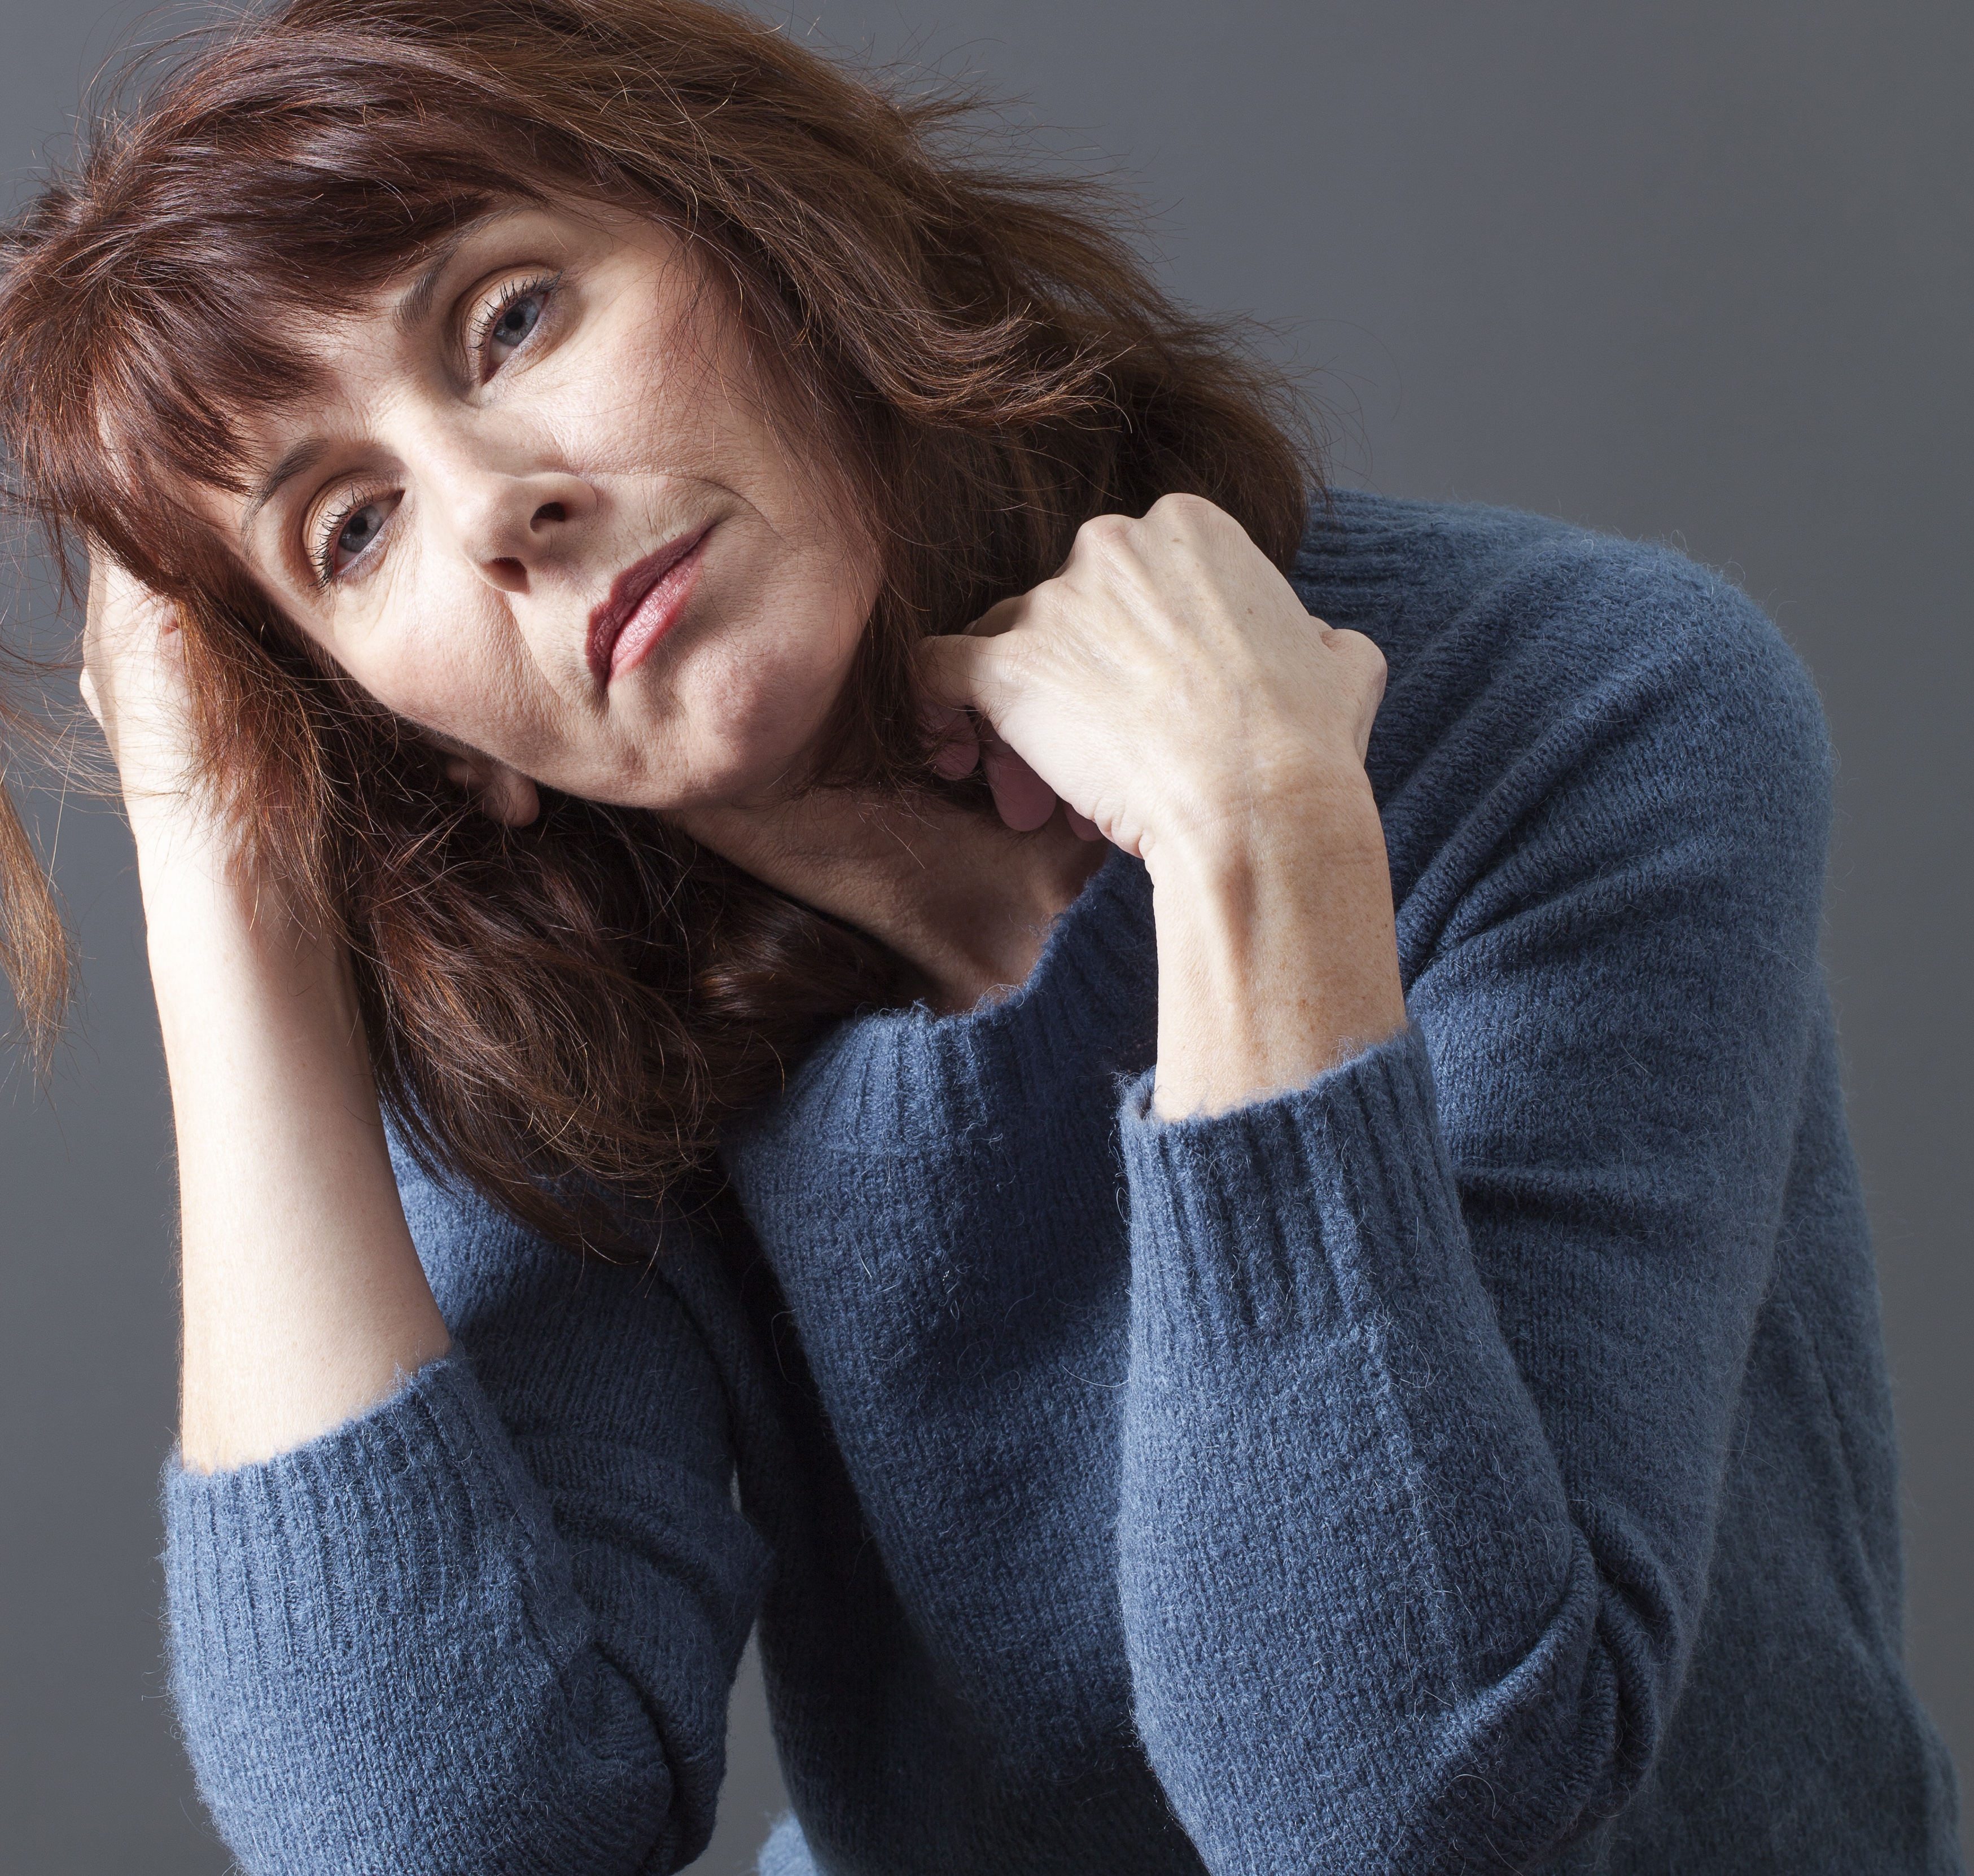 Feb 2021 Hair loss during menopause